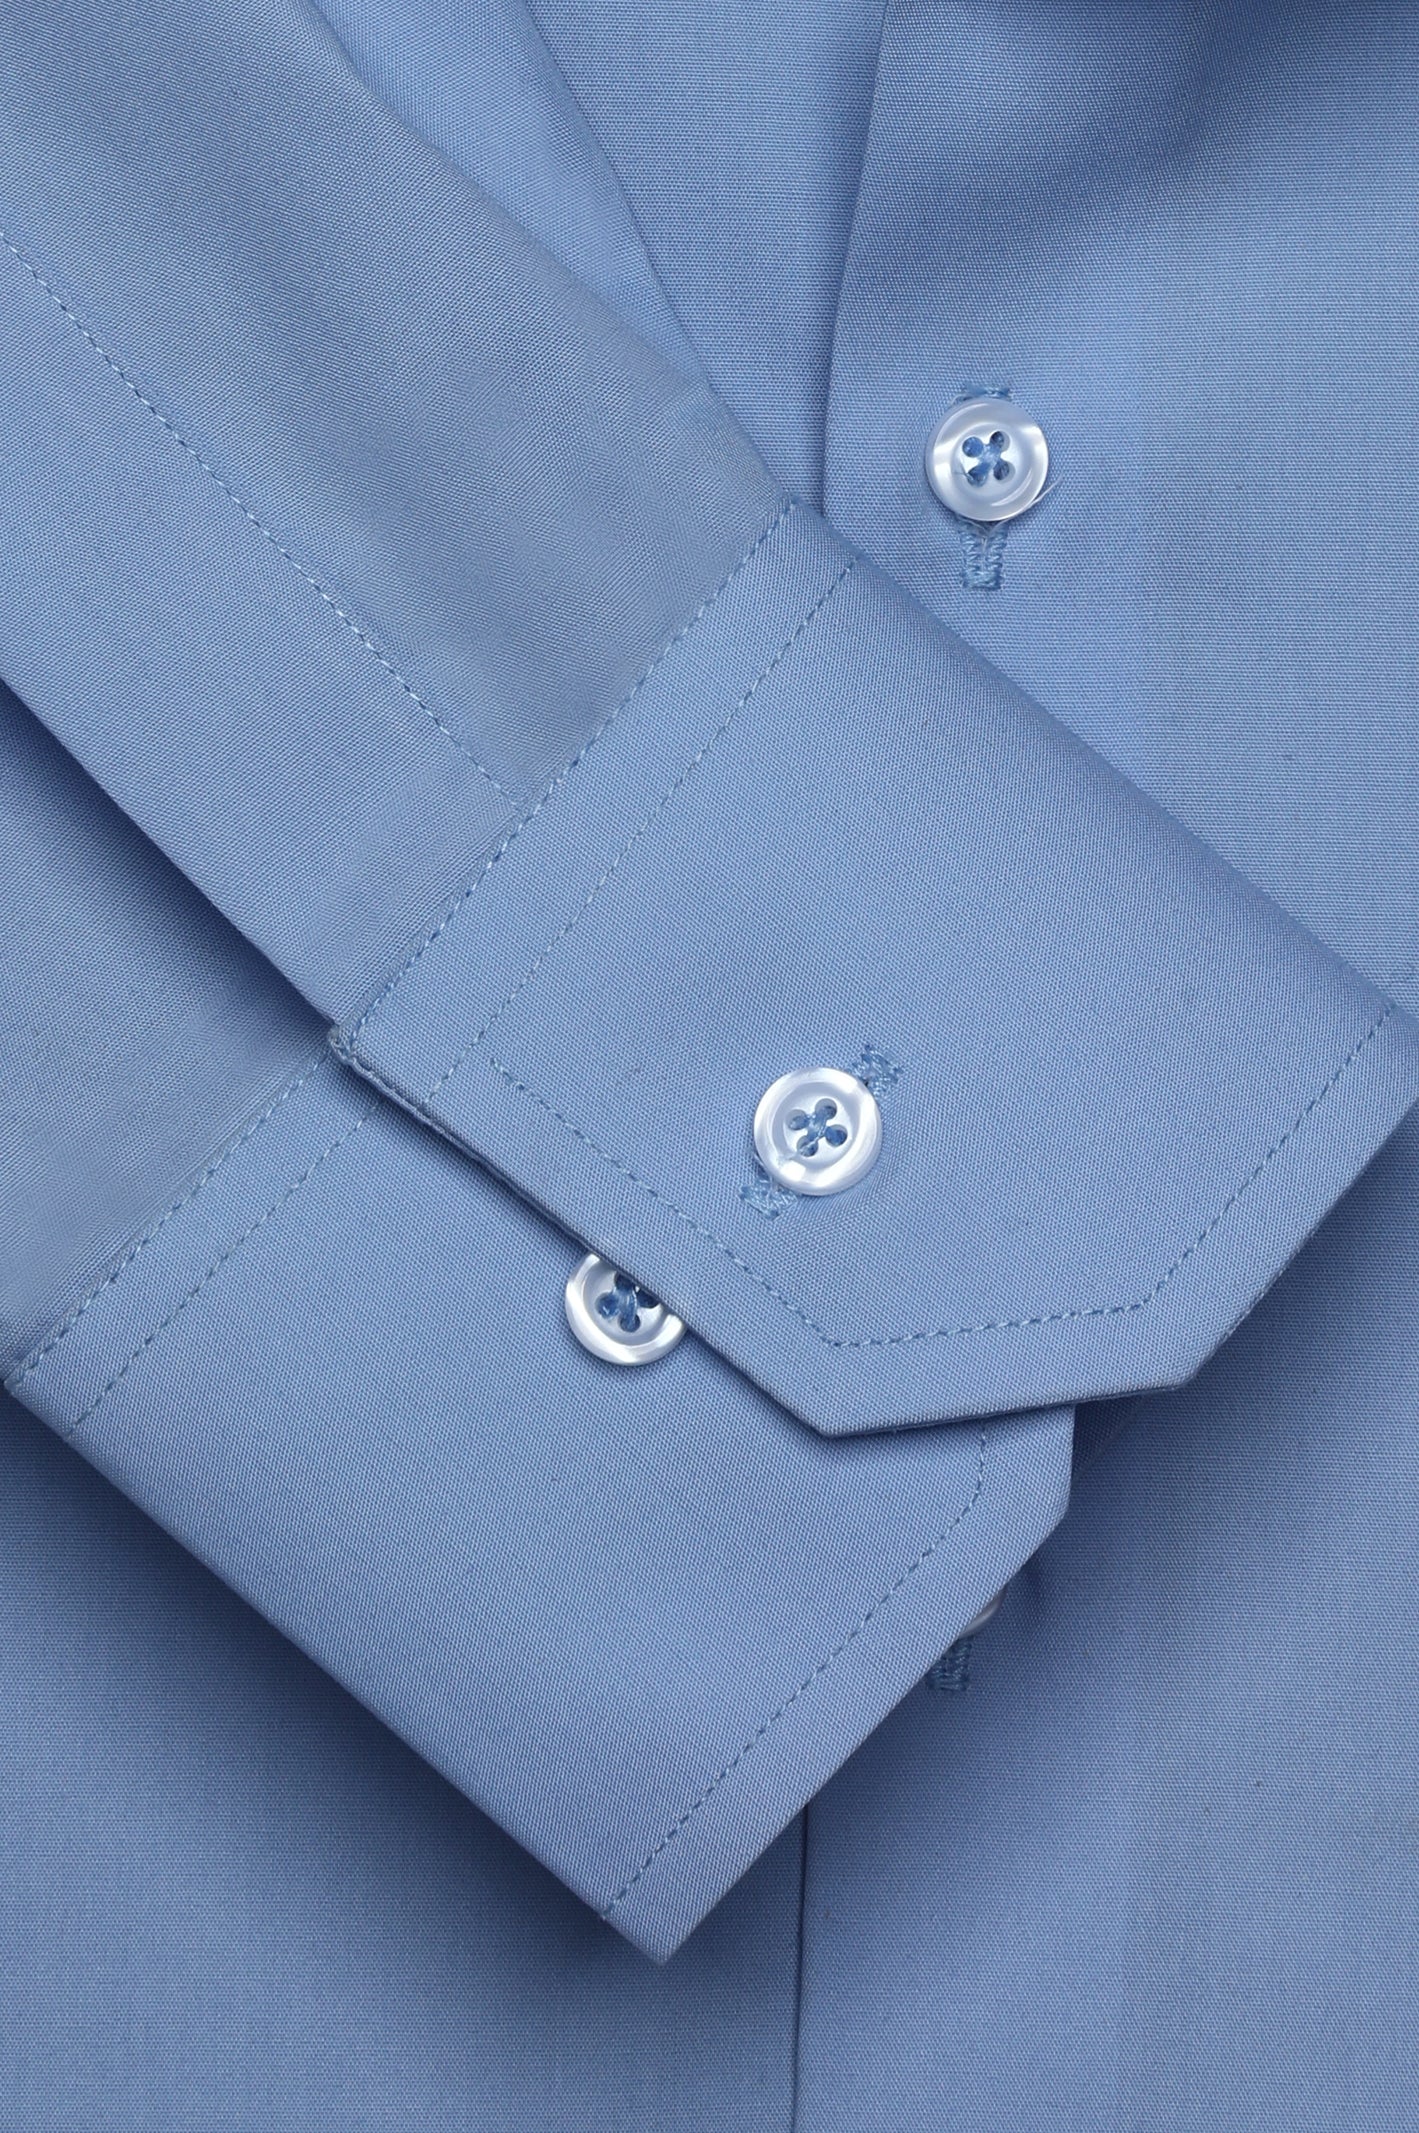 Sky Blue Plain Formal Shirt For Men - Diners